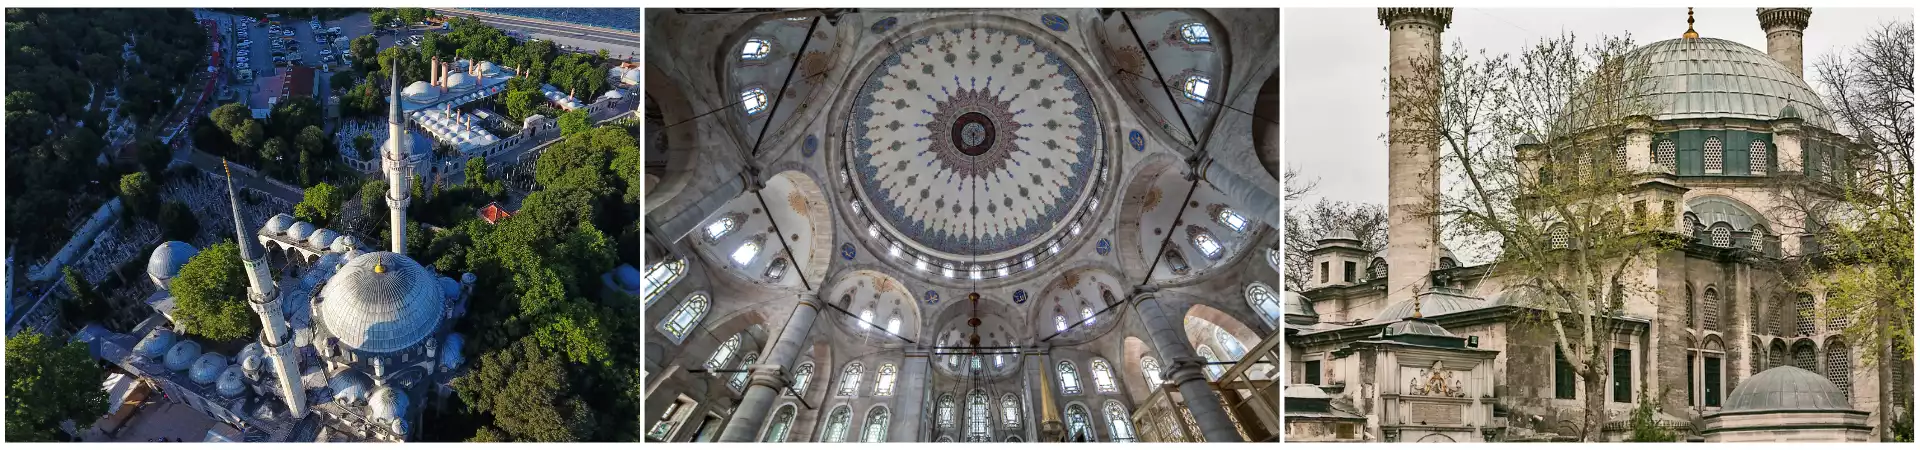 Obilazak Eyup Sultan džamije